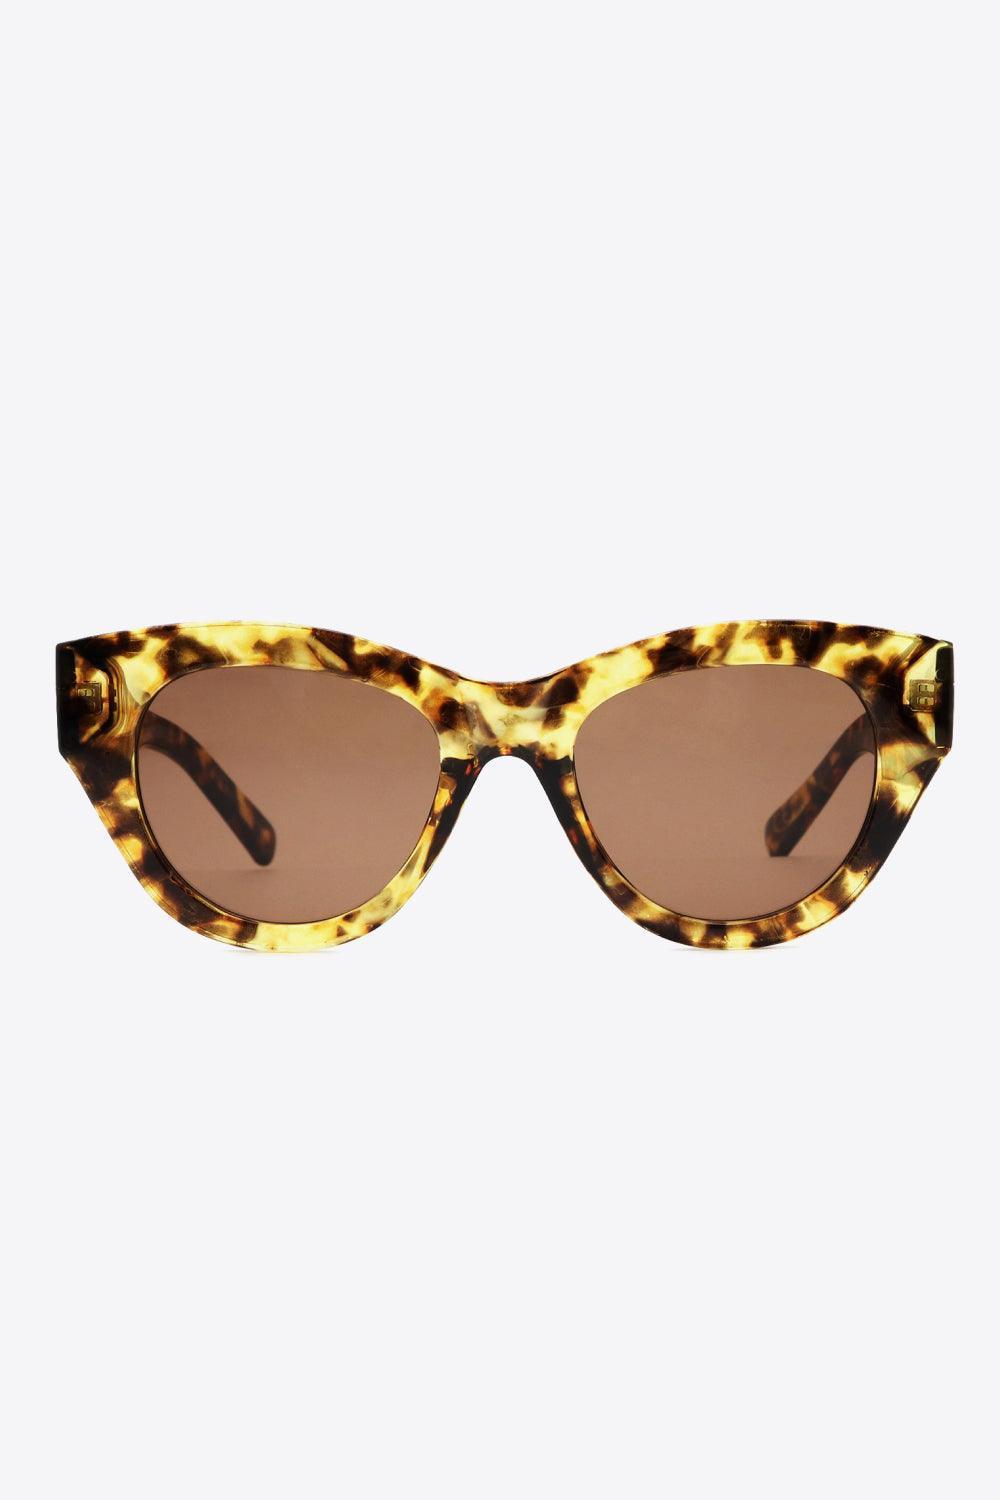 Women's Polycarbonate Wayfarer Tortoiseshell Sunglasses - MXSTUDIO.COM